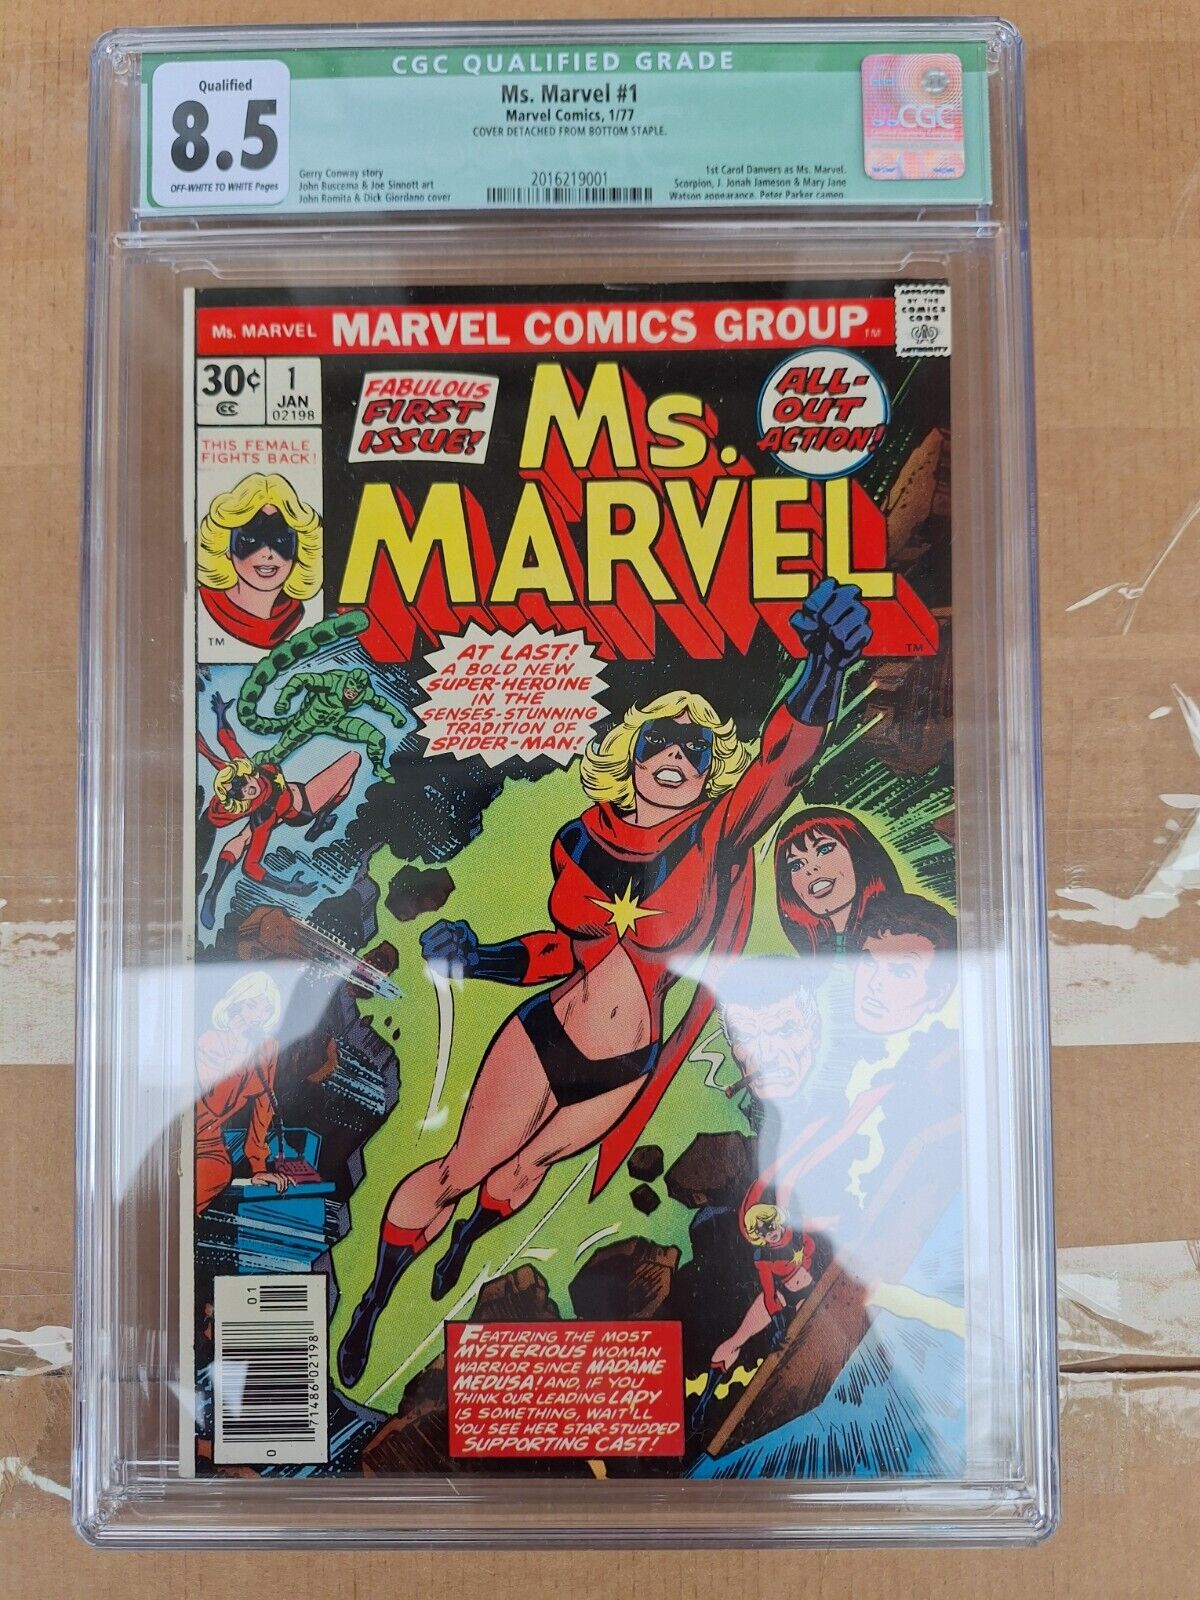 Ms. Marvel #1 CGC 8.5 Marvel Comics (1977) 1st app. of Ms. Marvel